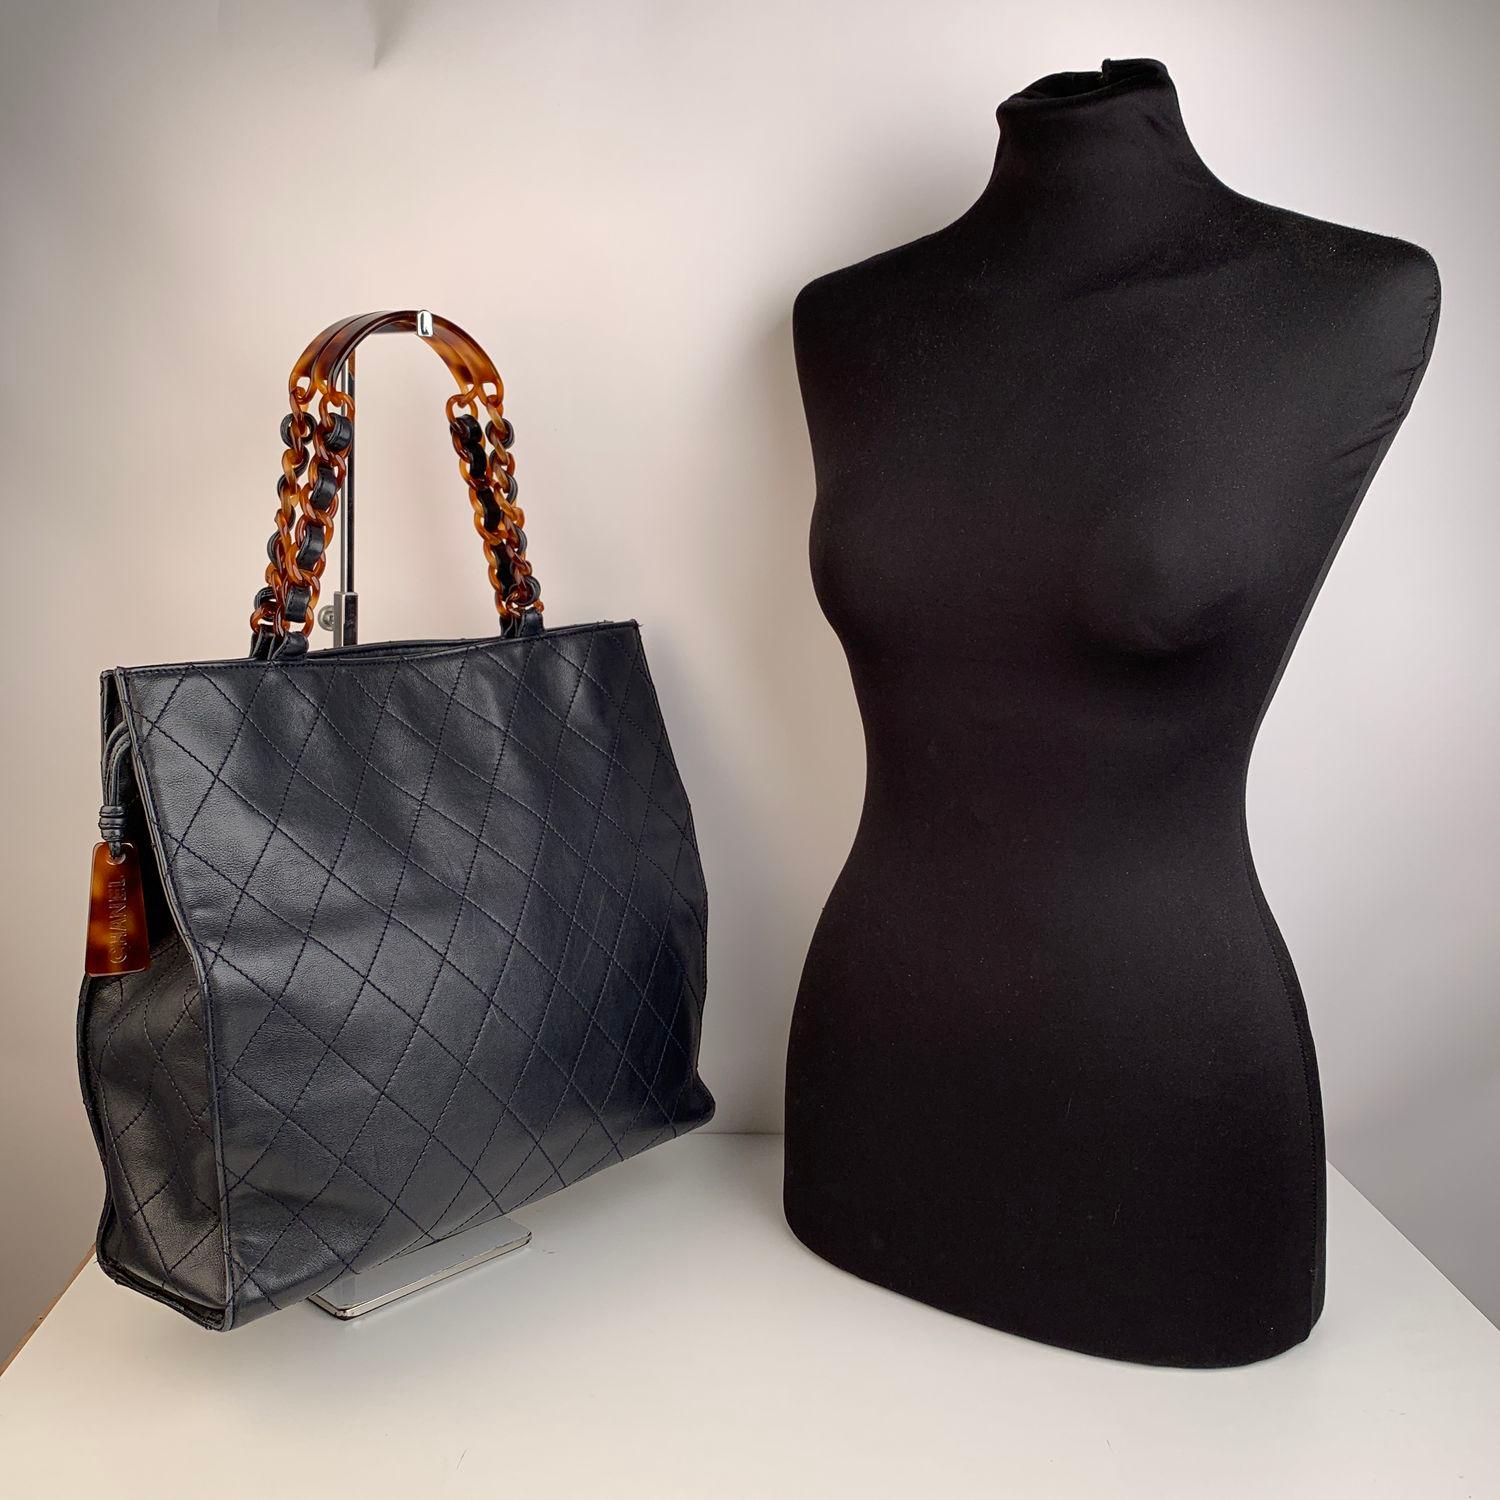 Black Chanel Vintage Blue Quilted Leather Tote Bag Shopper Lucite Handles